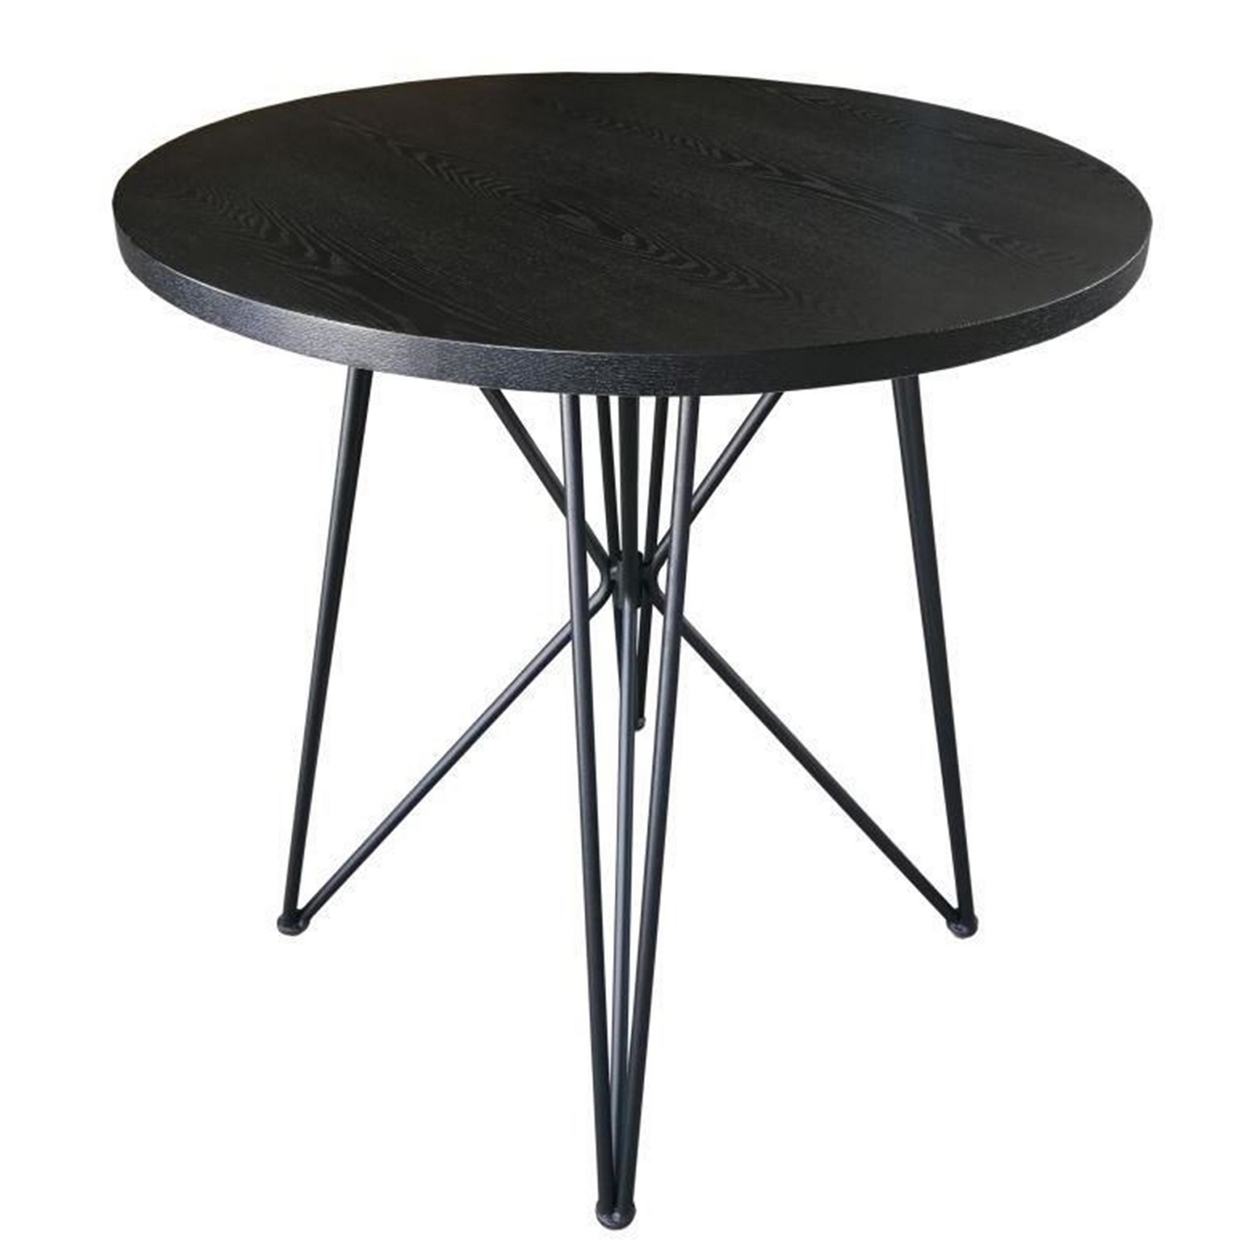 45 Inch Round Dining Table, Wood Grain Details, Butterfly Legs, Black - Saltoro Sherpi